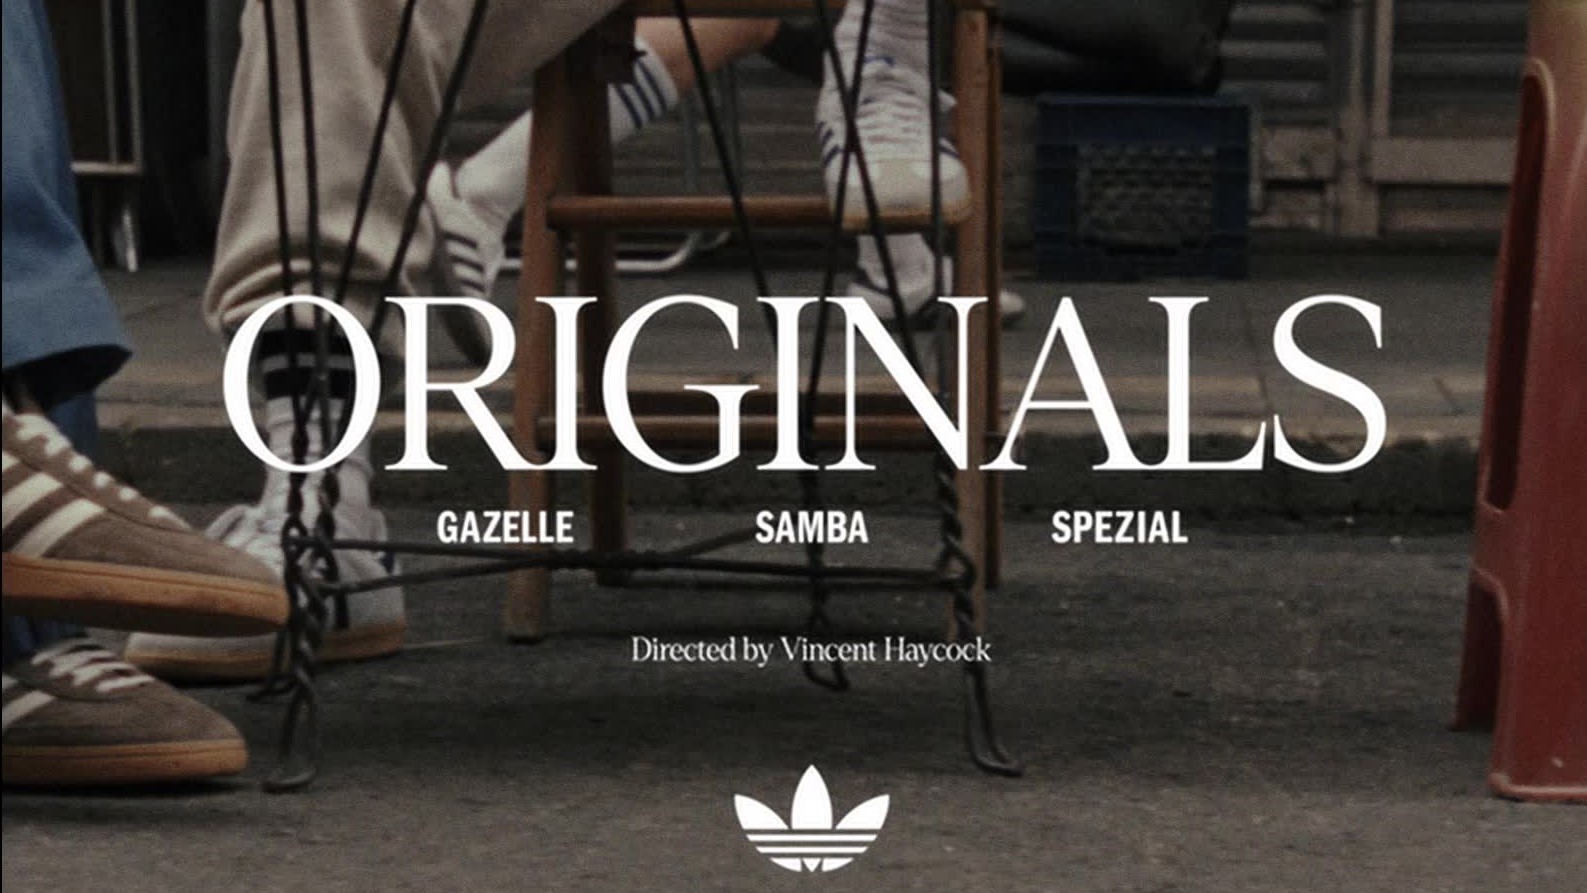 adidas Originals - New